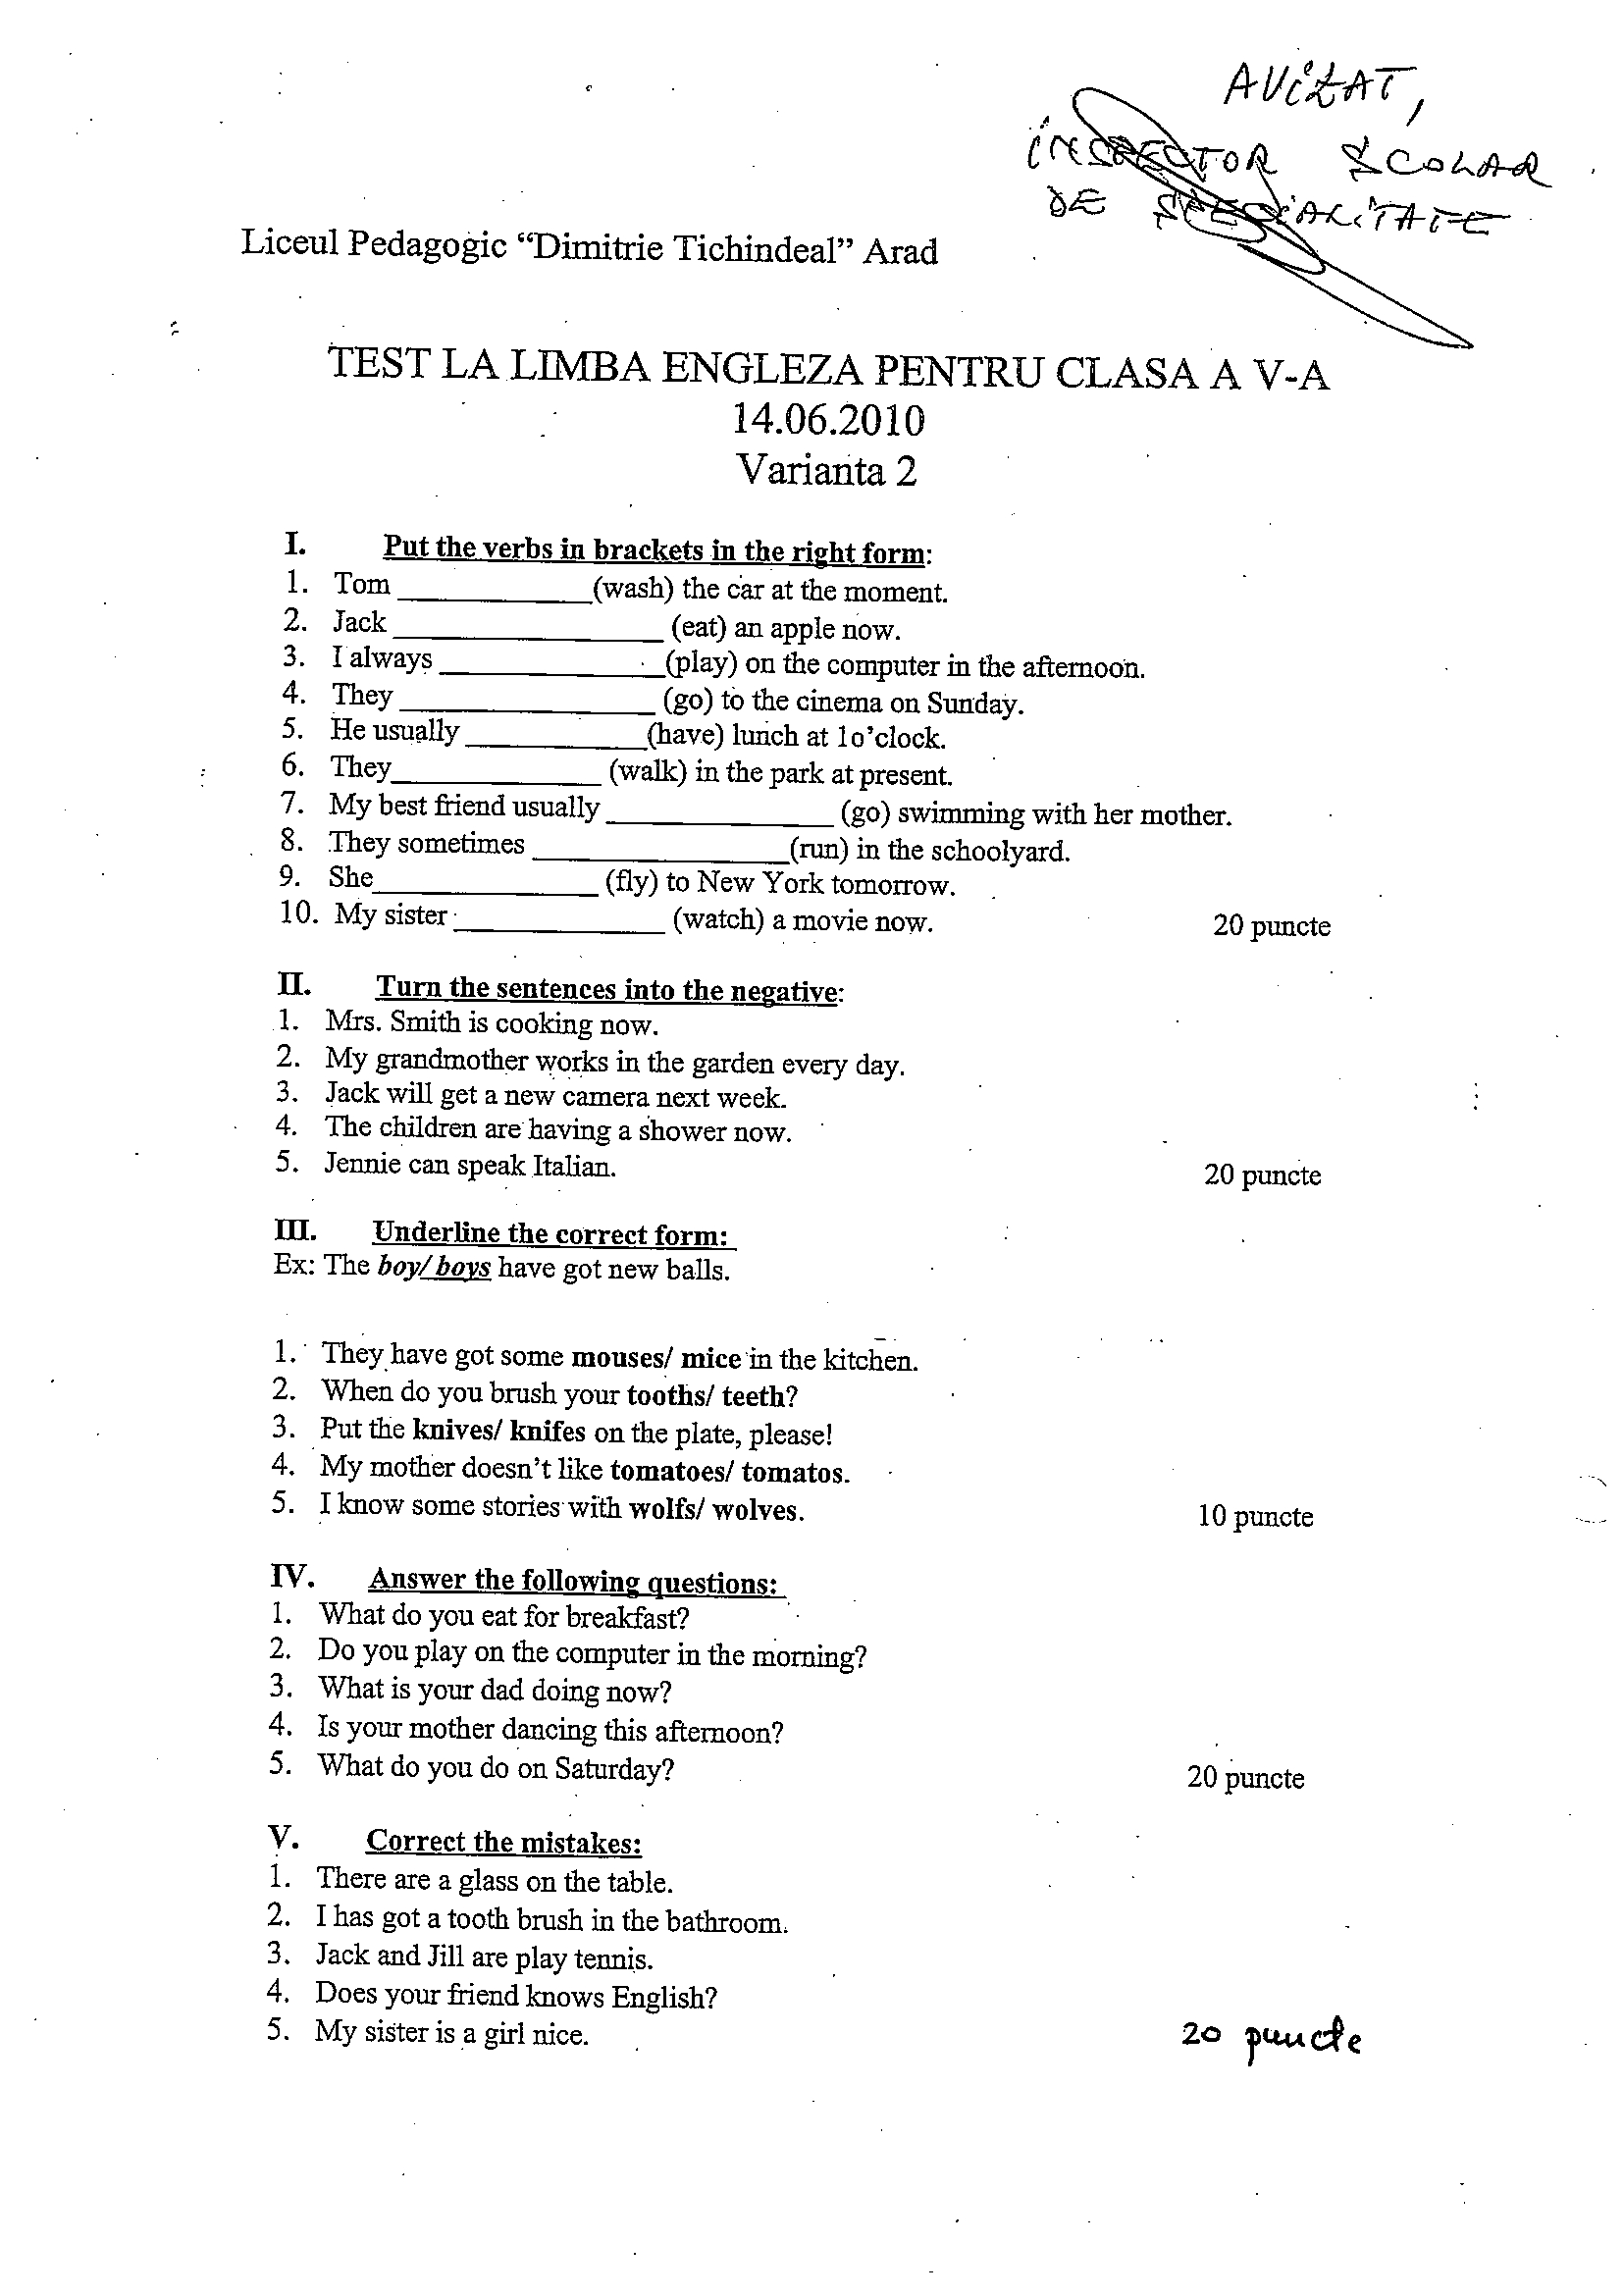 test initial la limba engleza clasa V lily_gheorghe 02